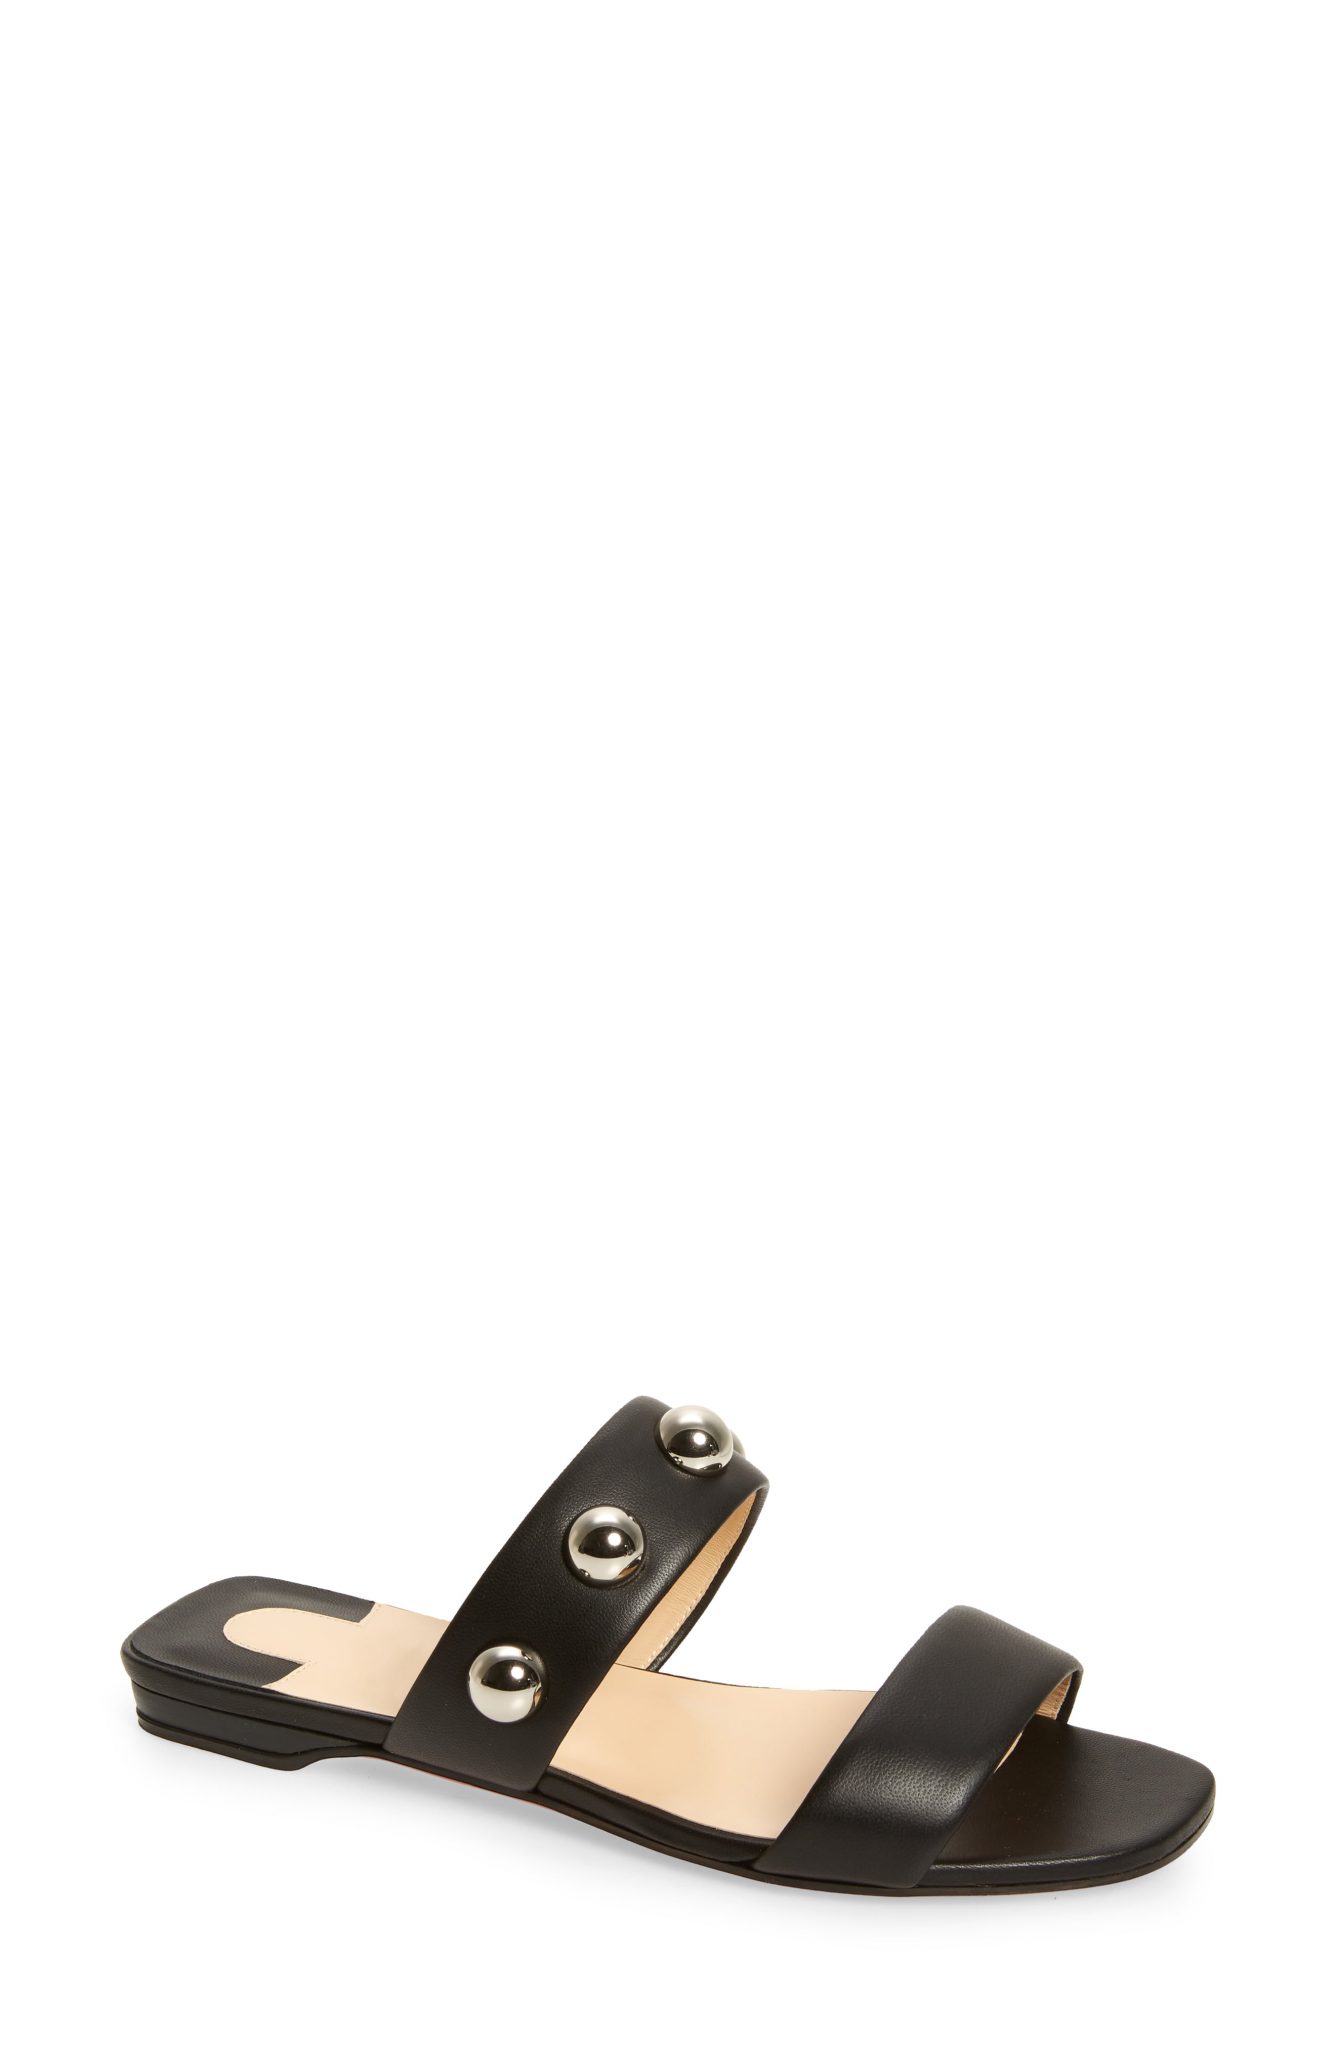 Women’s Christian Louboutin Simple Bille Slide Sandal, Size 5US - Black ...